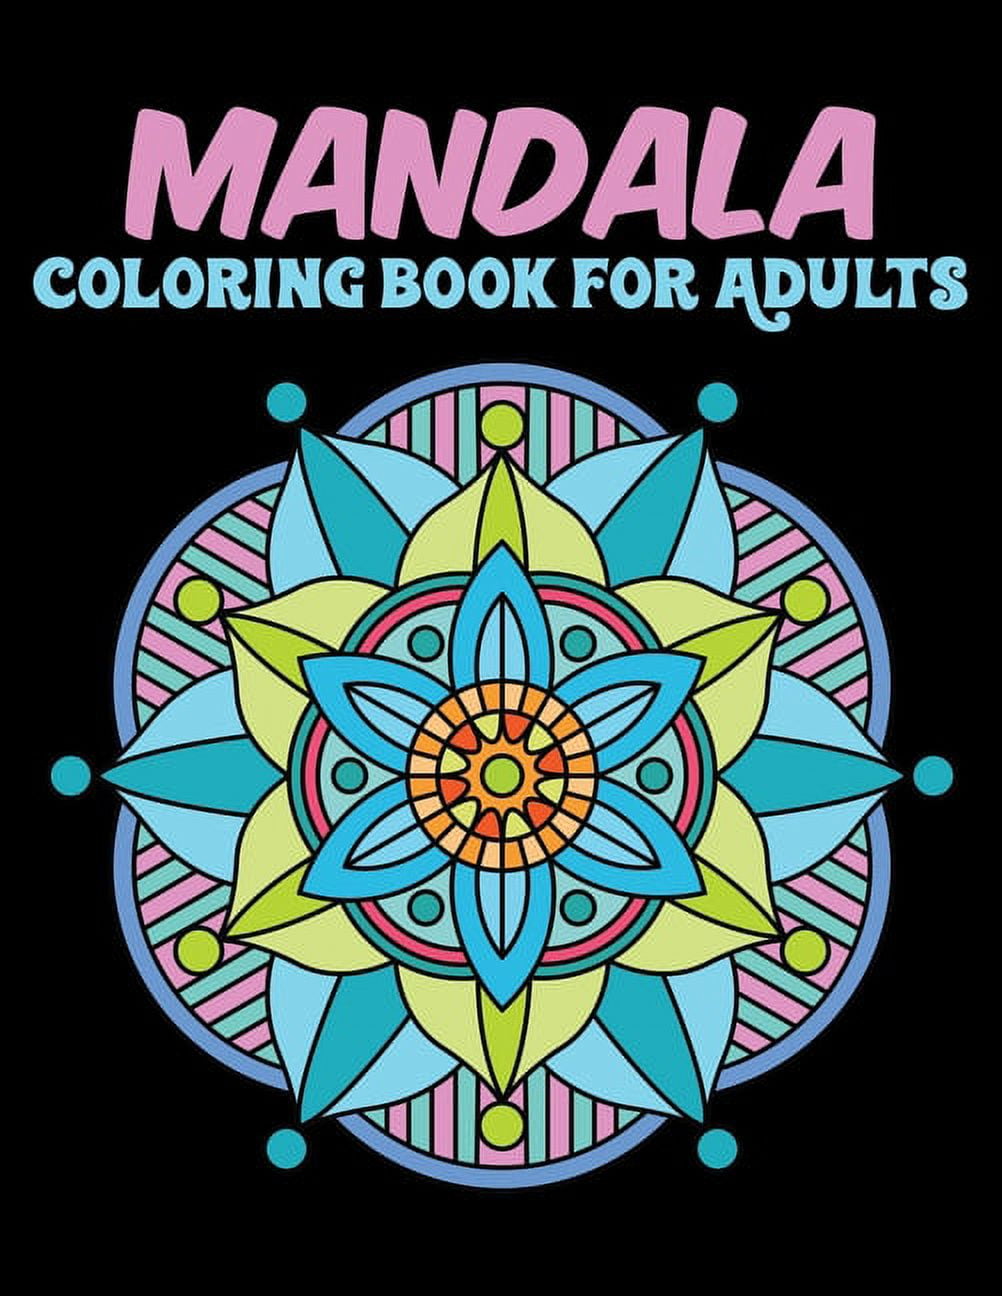 Mandala Coloring Magic - Adult Coloring Book - 8.5 x 11 inches